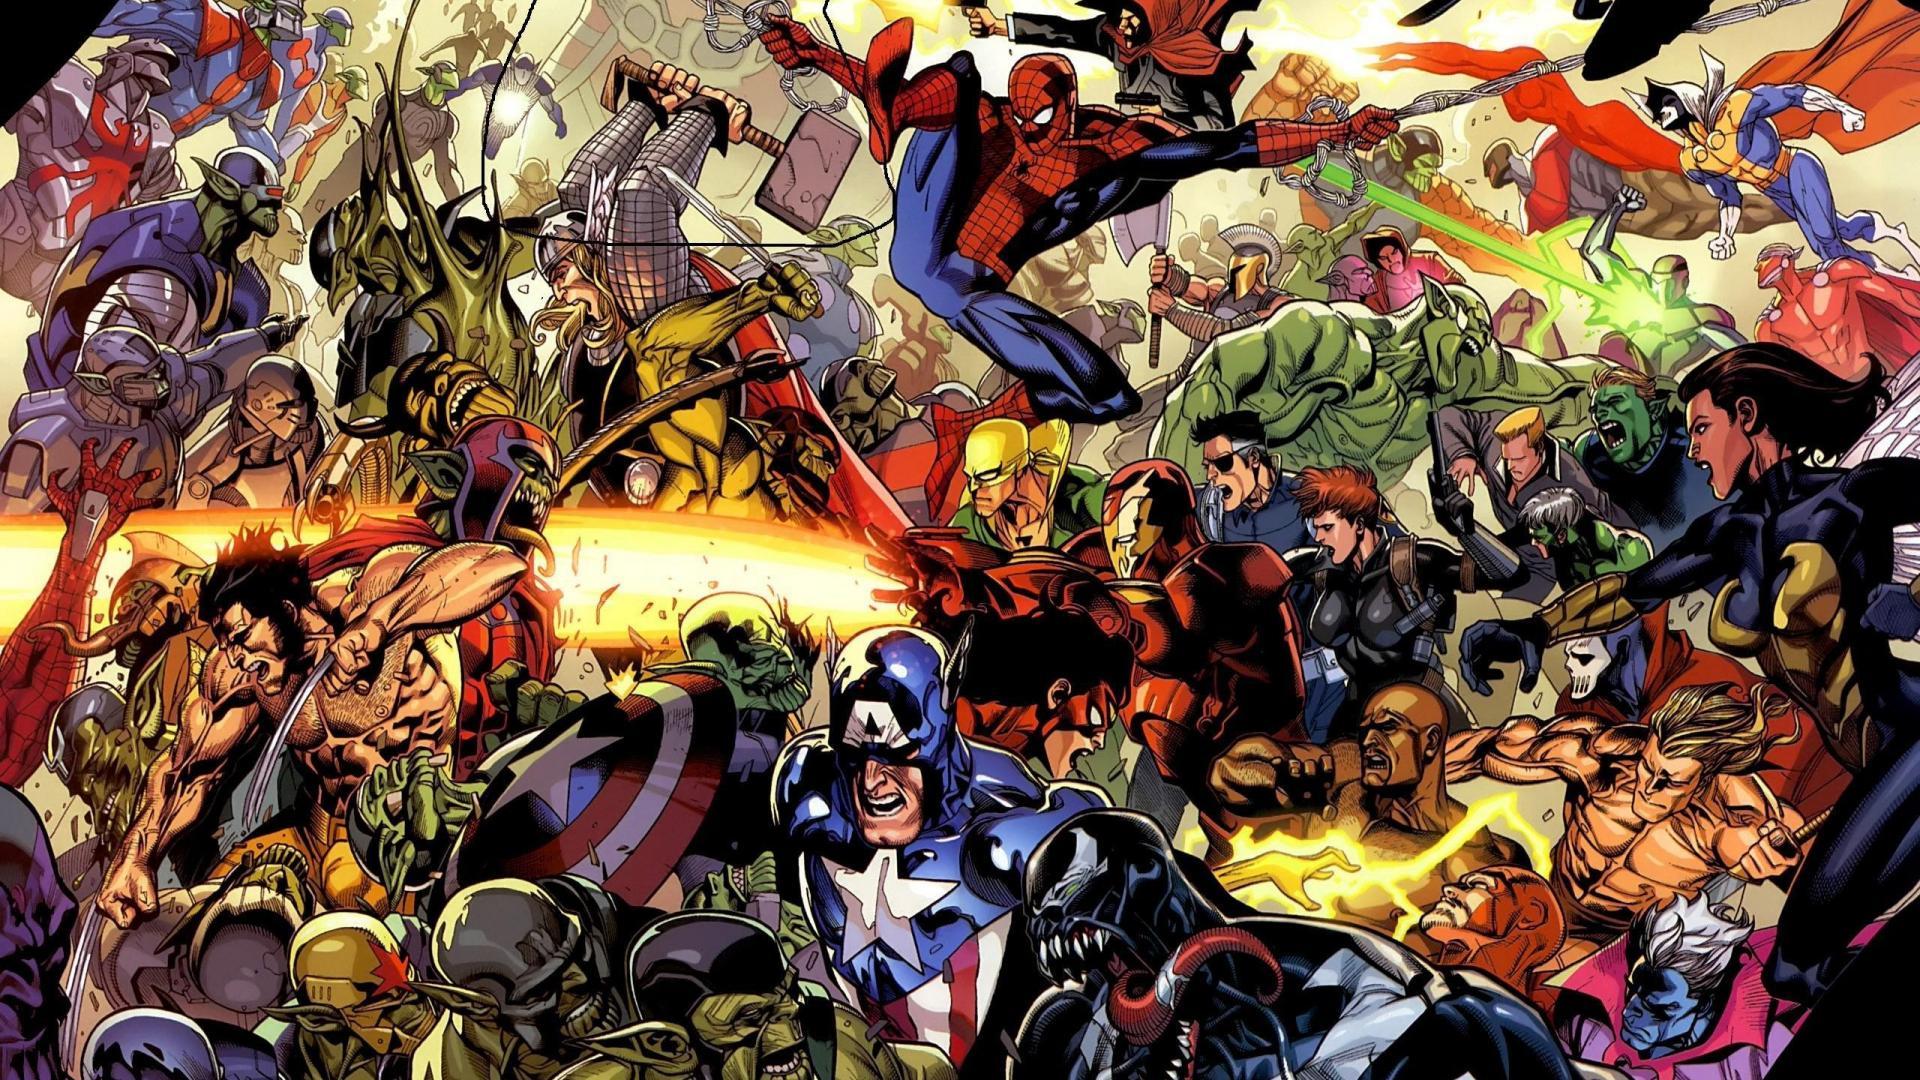 Marvel Superheroes Wallpaper HD